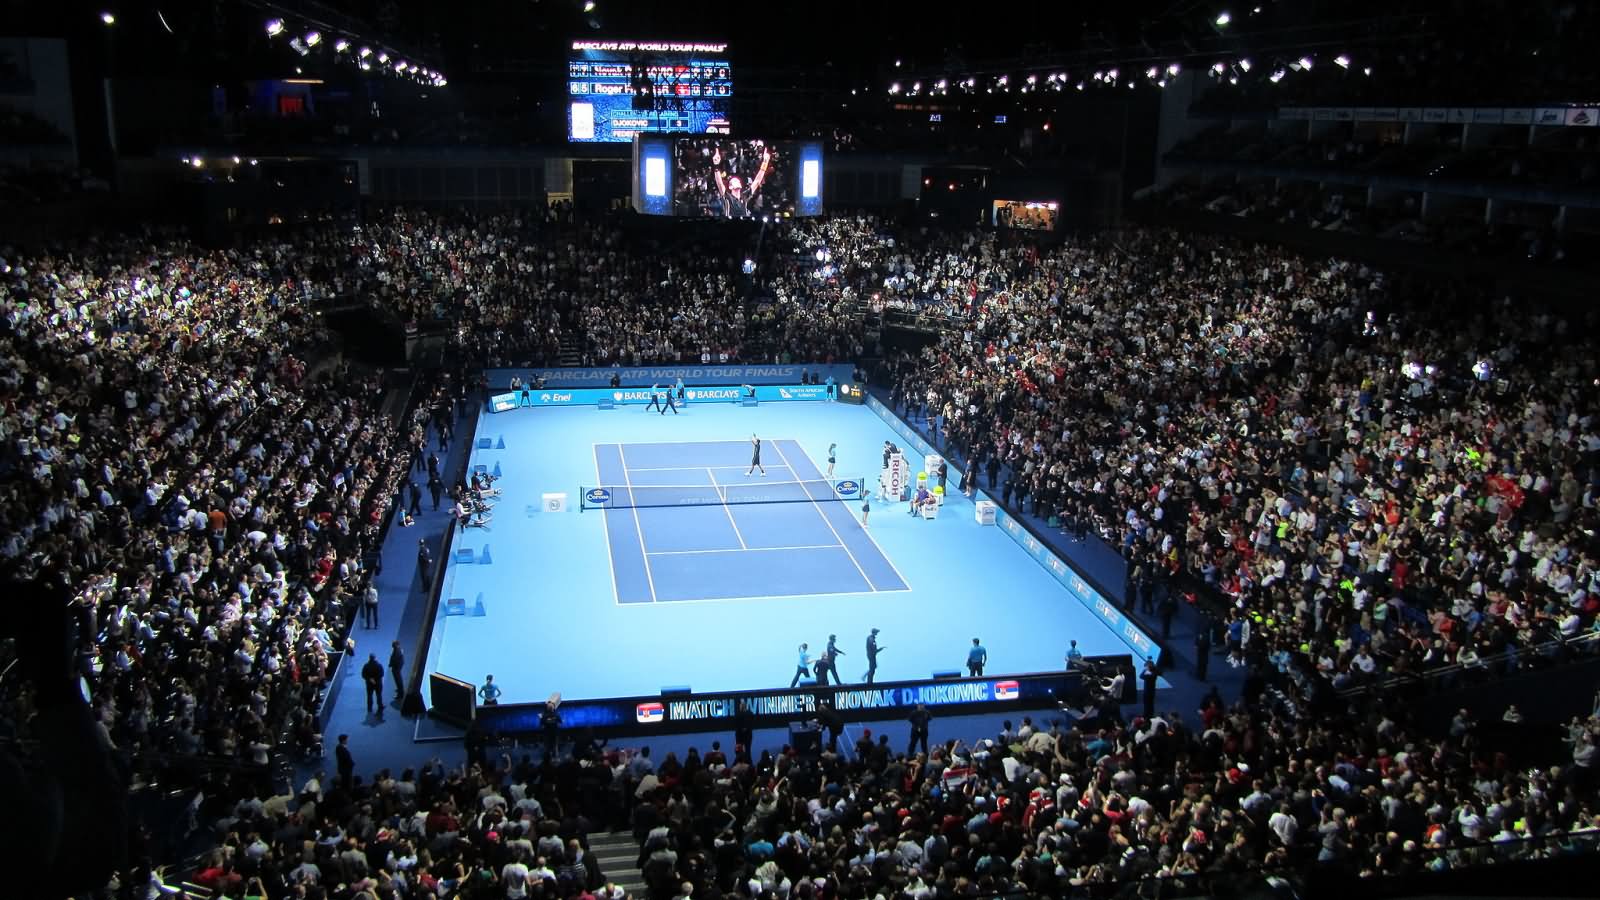 ATP Tennis At The O2 Arena